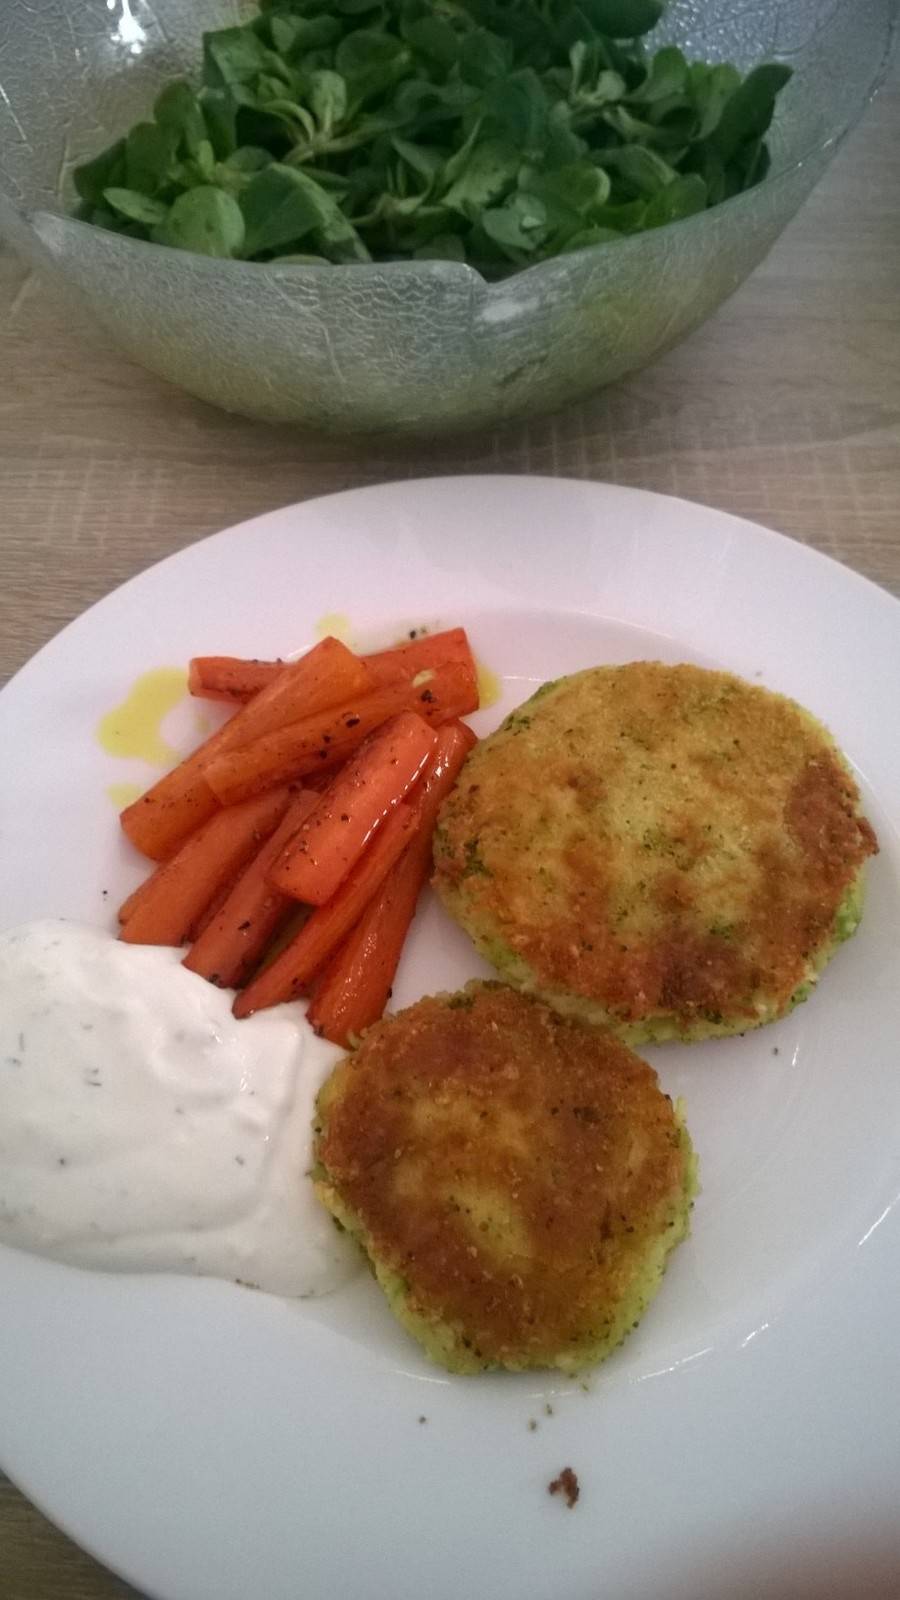 Kartoffel-Brokkoli-Käse Laibchen mit Honig-Karotten